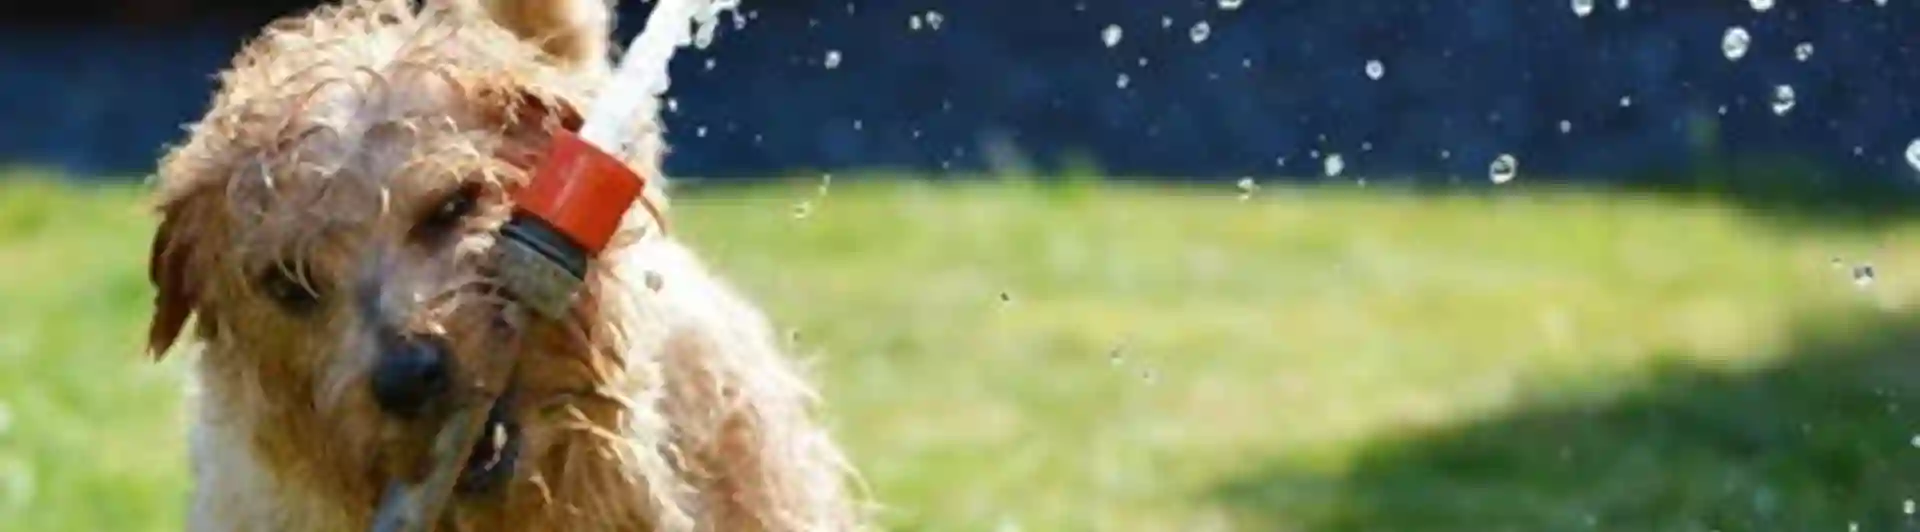 Hund leker med vattenslang